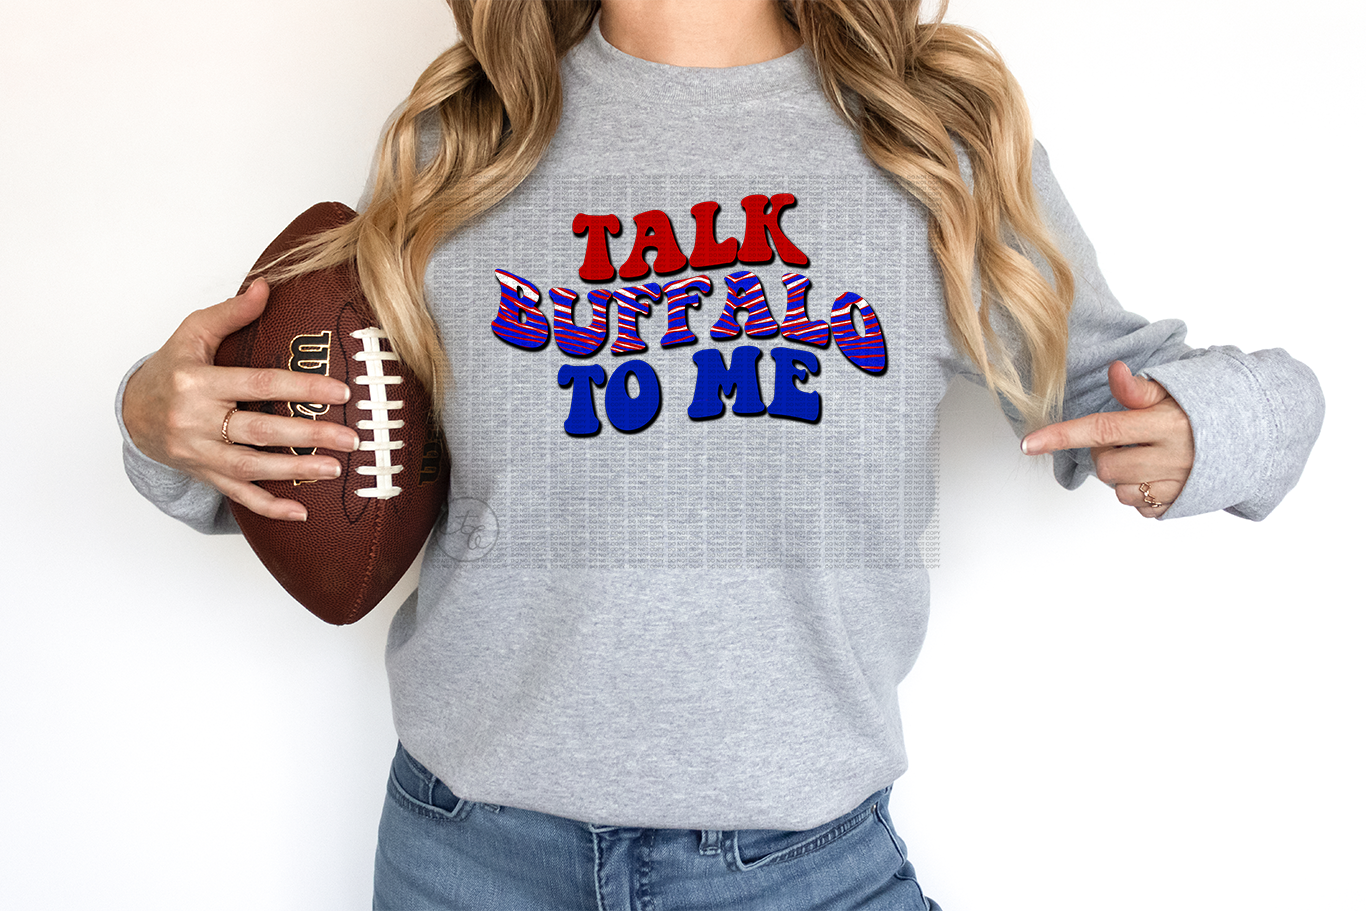 Talk Buffalo To Me